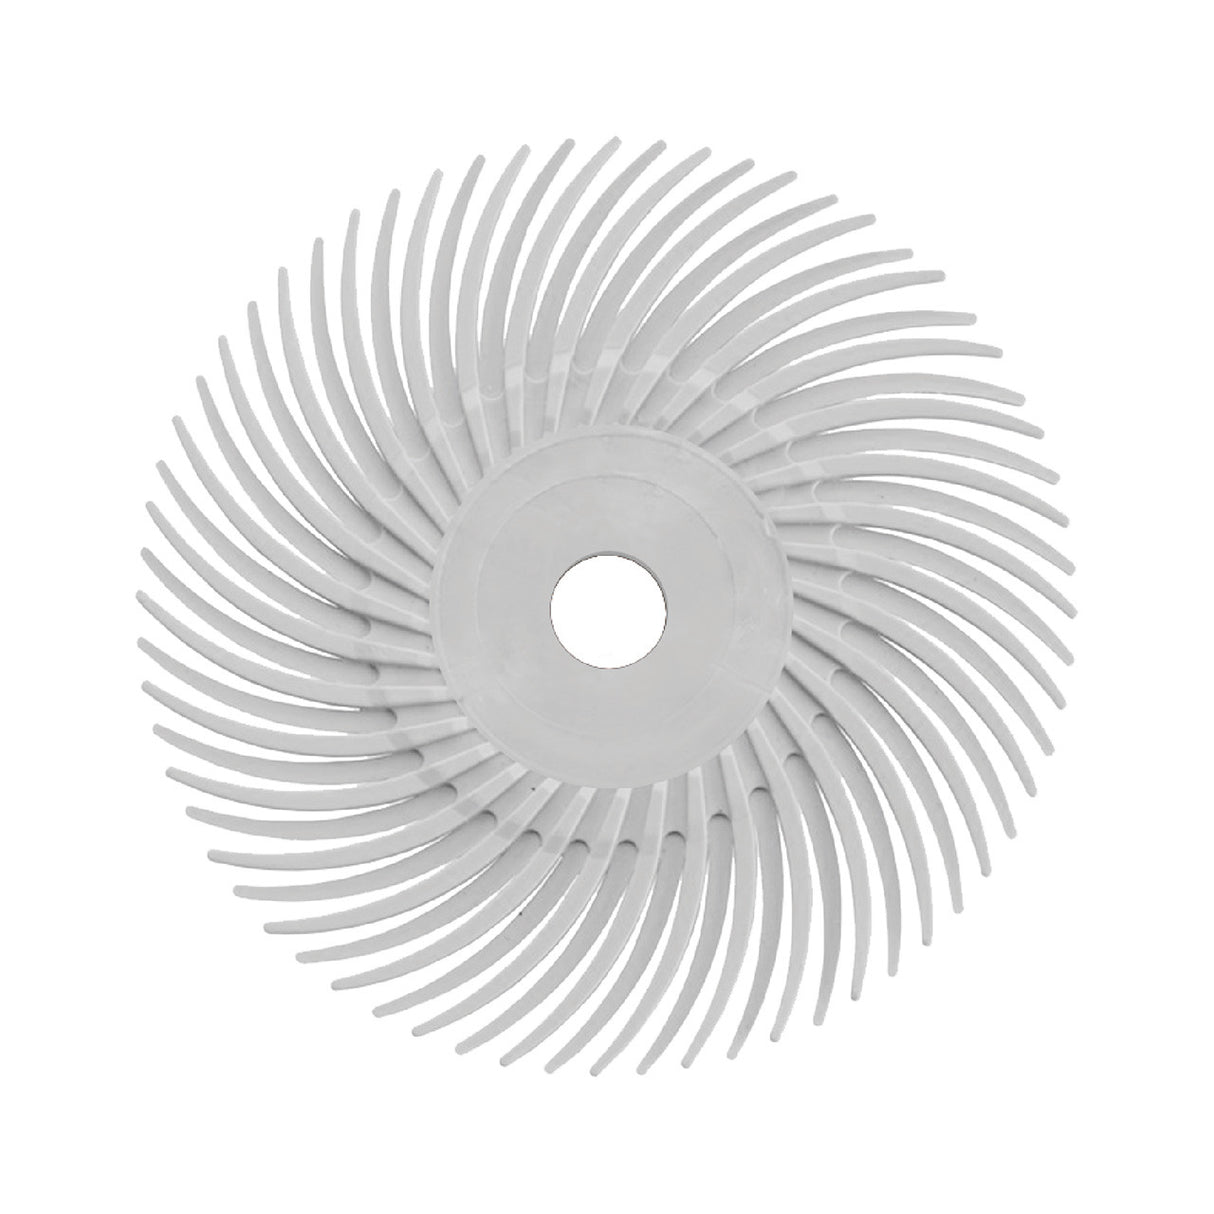 Dedeco® SUNBURST® Radial Discs - 3" (3/8" Center Hole) Pkg. of 12